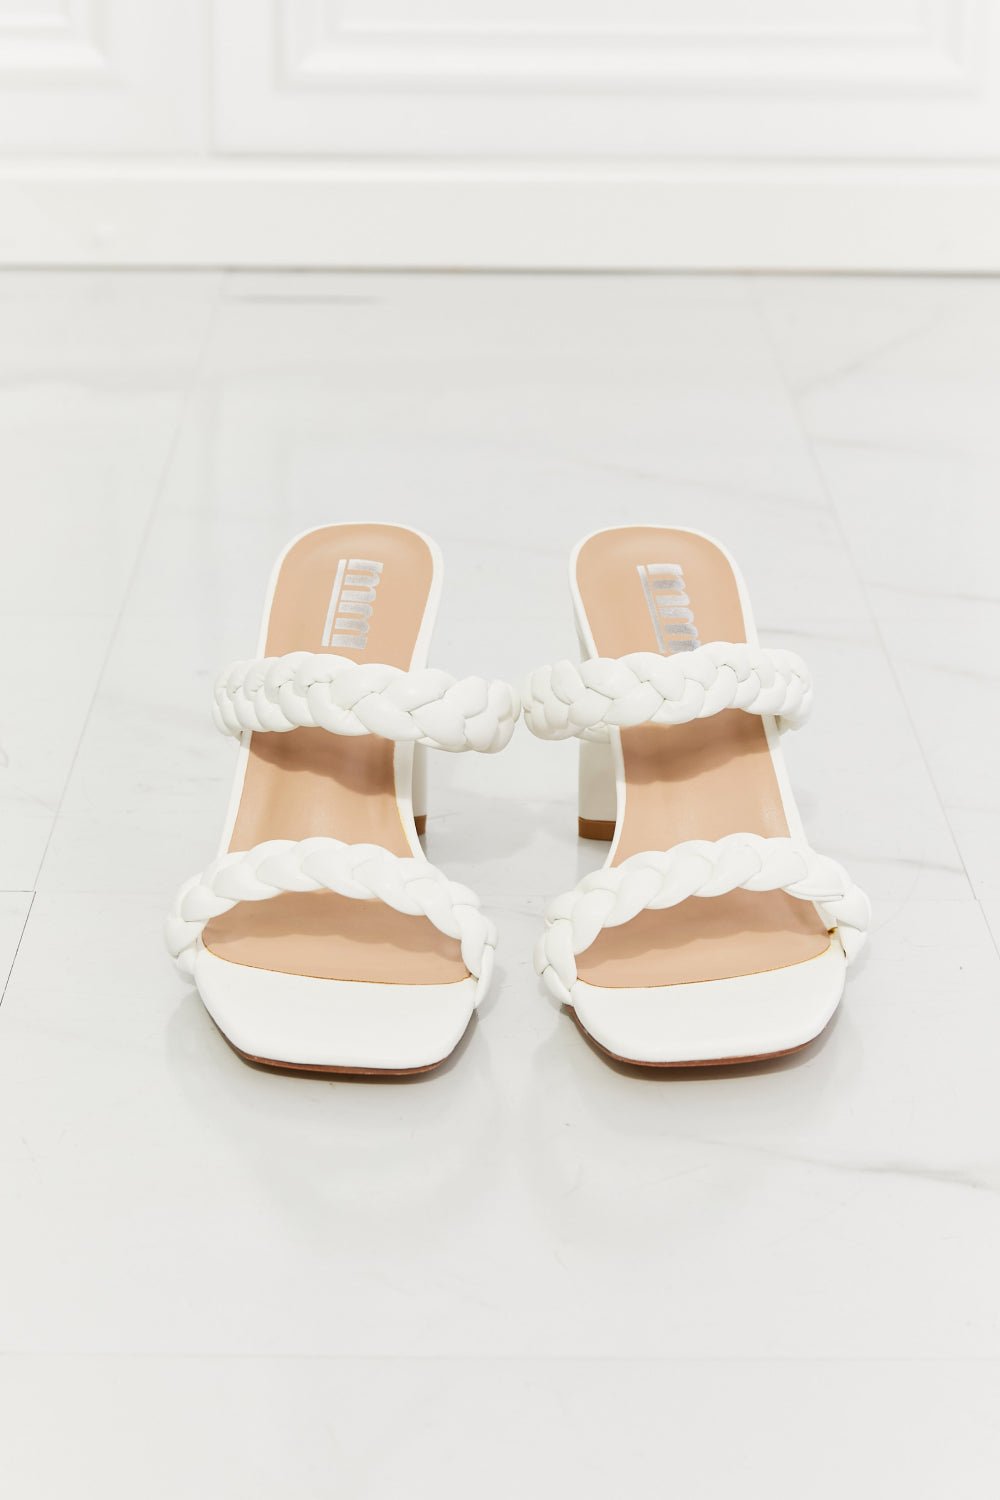 Double Braided Block Heel Sandal in White - Fashion Girl Online Store